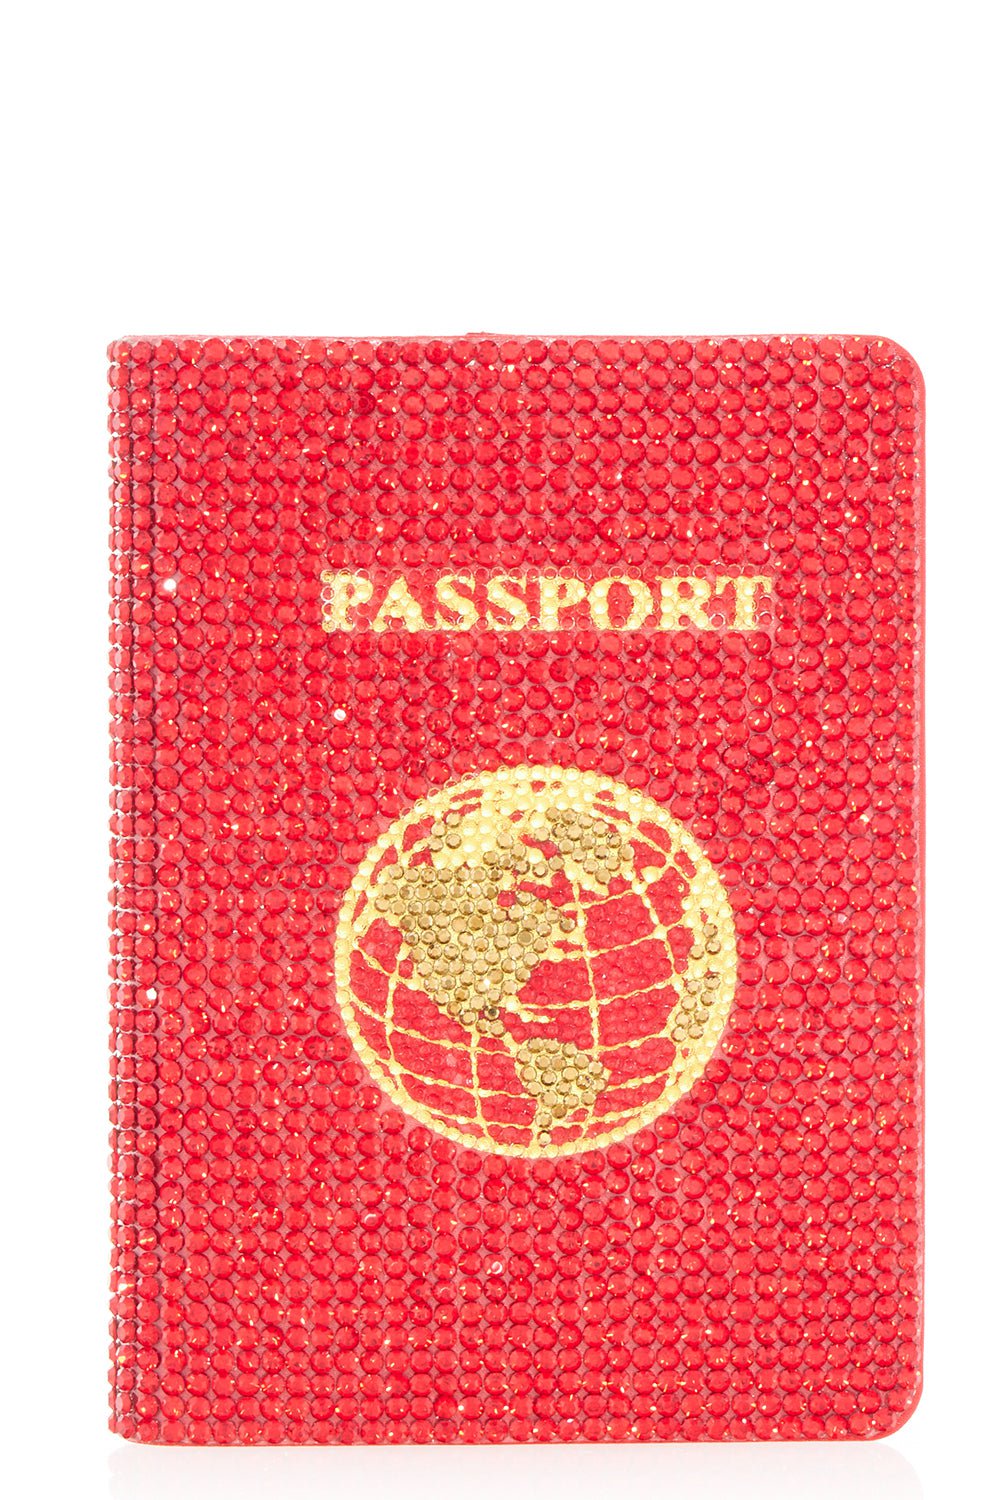 Traveler Passport Holder - Red HANDBAGACCESSORIES JUDITH LEIBER   